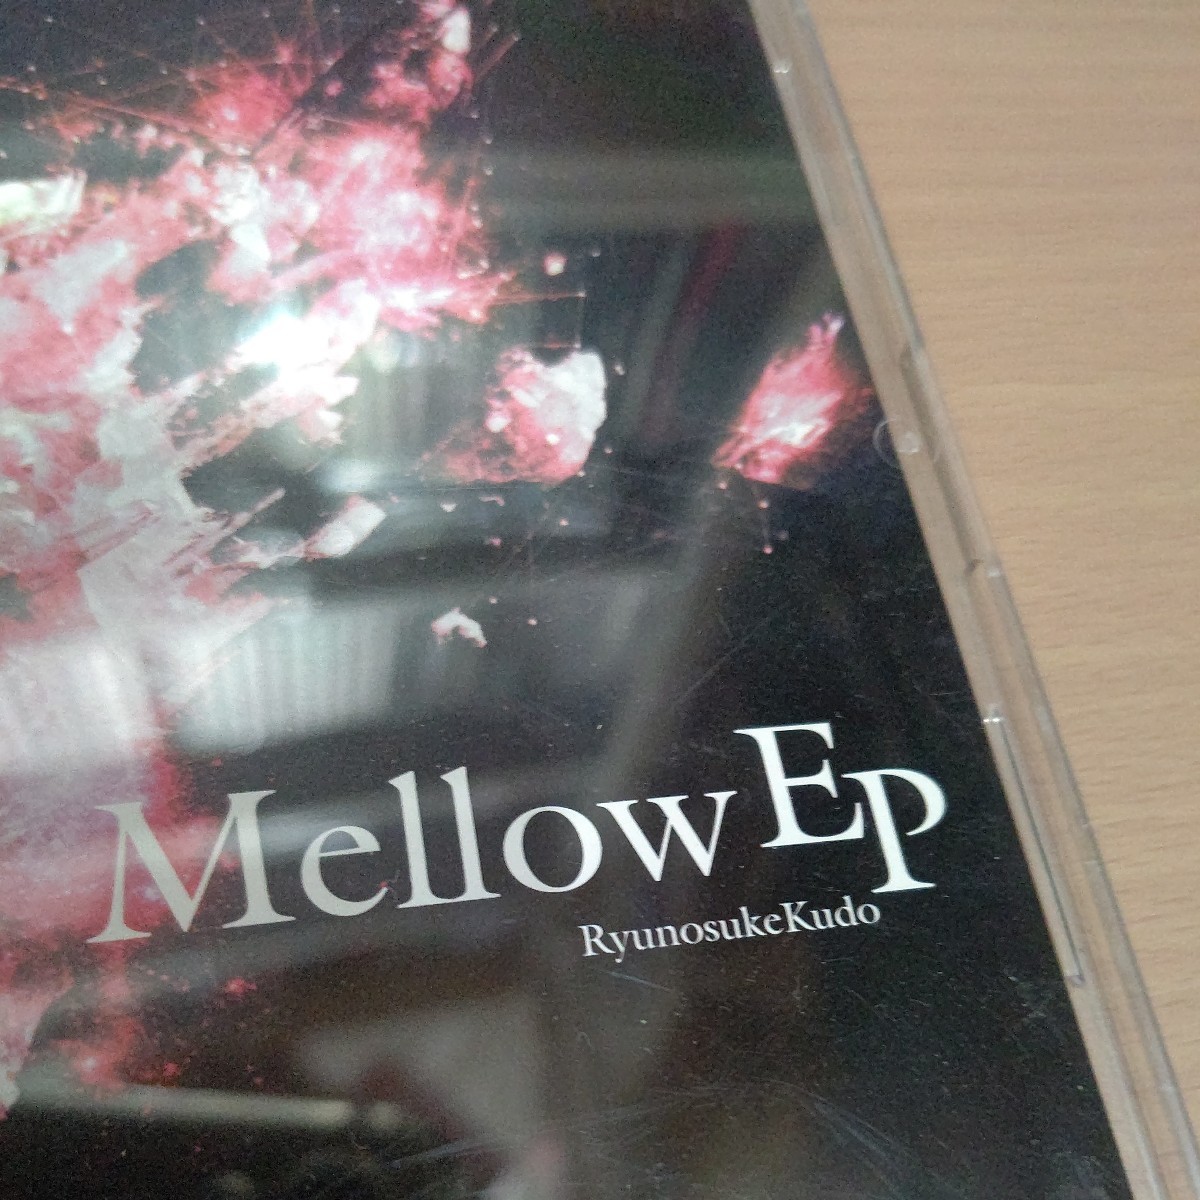 Mellow EP／Ryunosuke Kudo 同人 Part A Sugar Beauty 2nd Mix 2nd Galaxy Part B reku YsK-439 2013 RKAL-001 CD-R仕様 希少